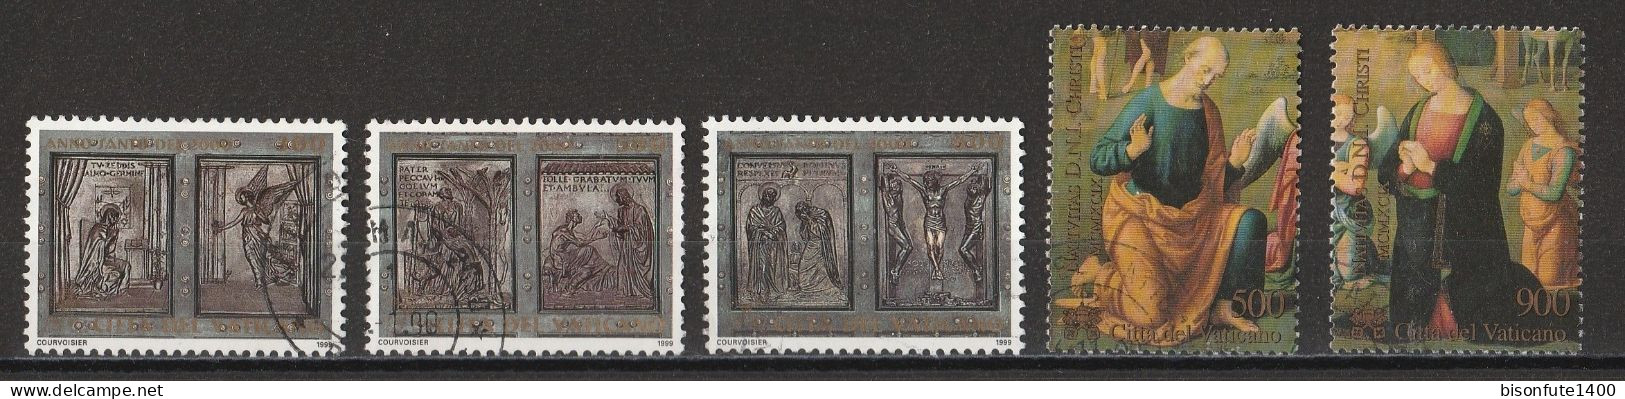 Vatican 1999 : Timbres Yvert & Tellier N° 1162 - 1164 - 1166 - 1177 - 1178 - 1179 Et 1180 Oblitérés - Usati